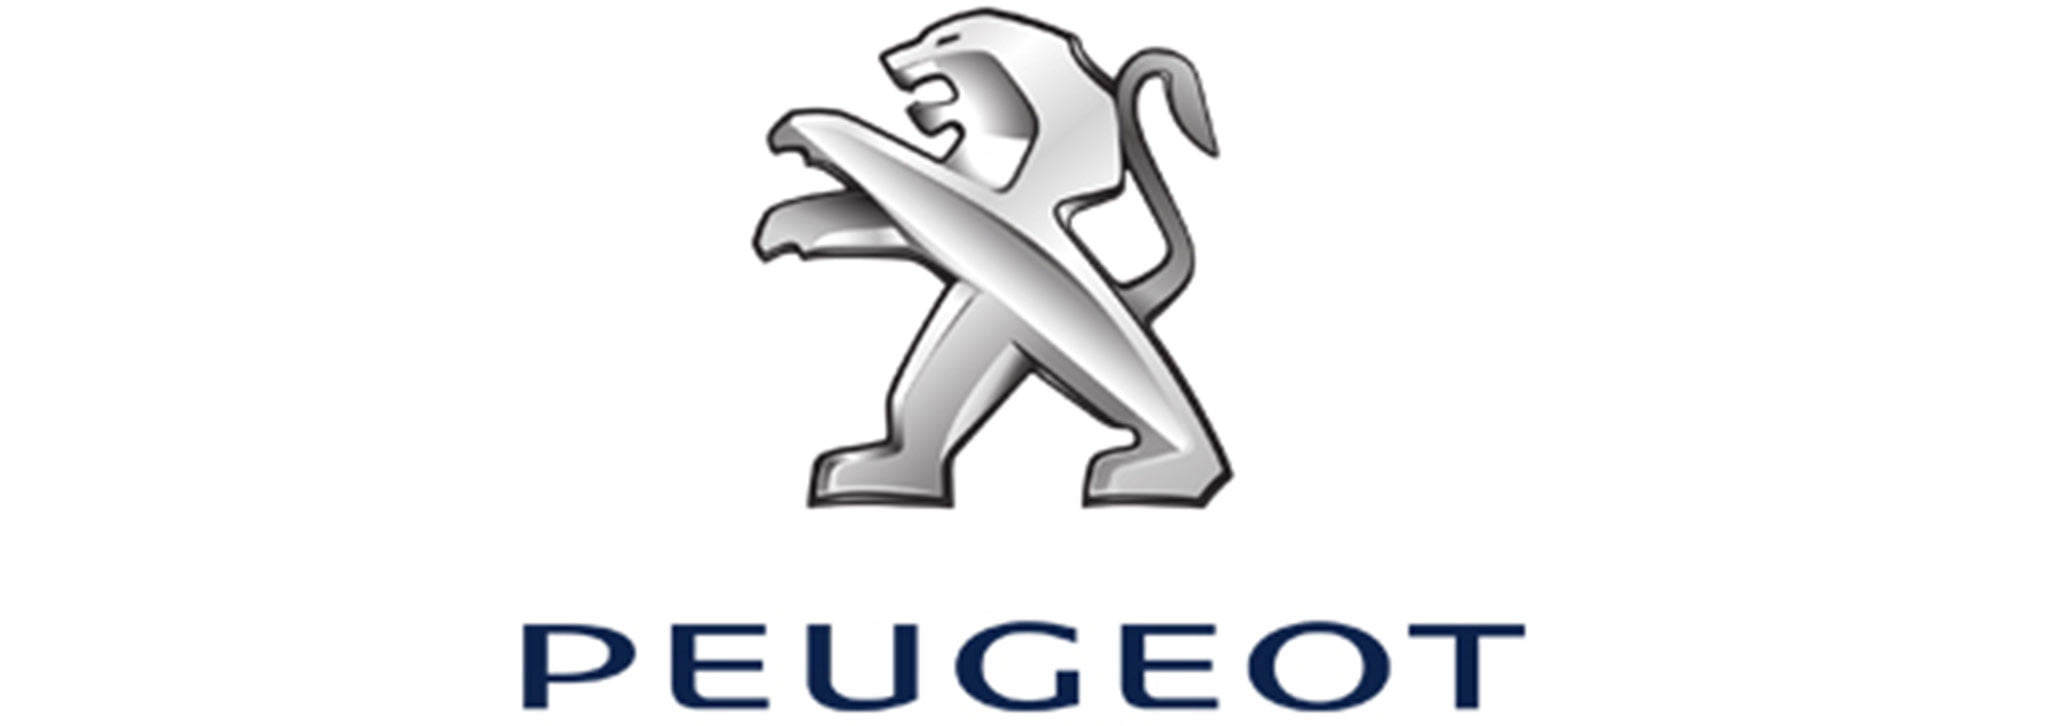 Logotipo Peugeot